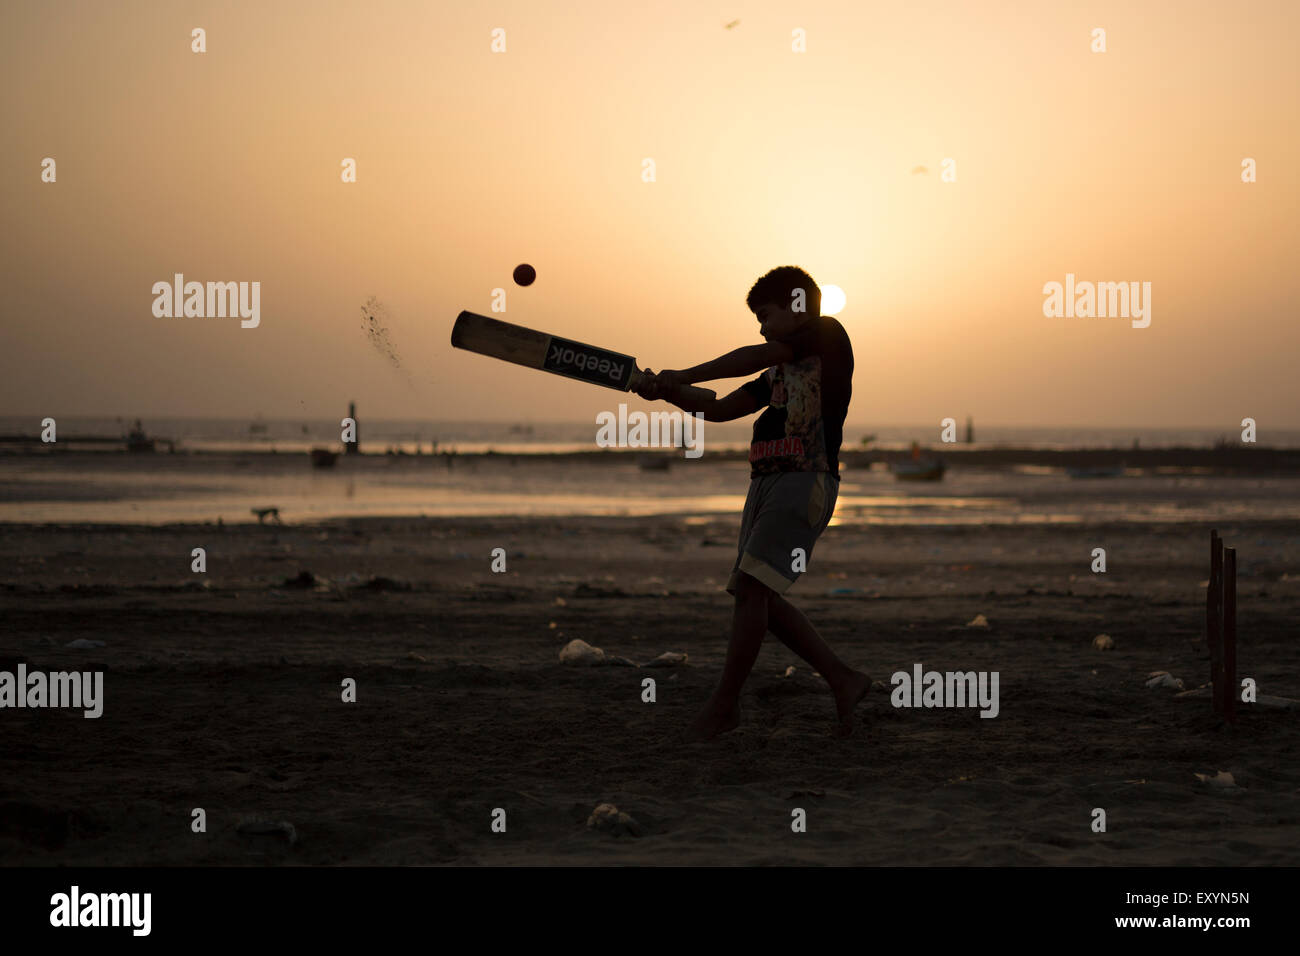 An Indian boy playing cricket during sunset at juhu beach in Mumbai, India. Stock Photo